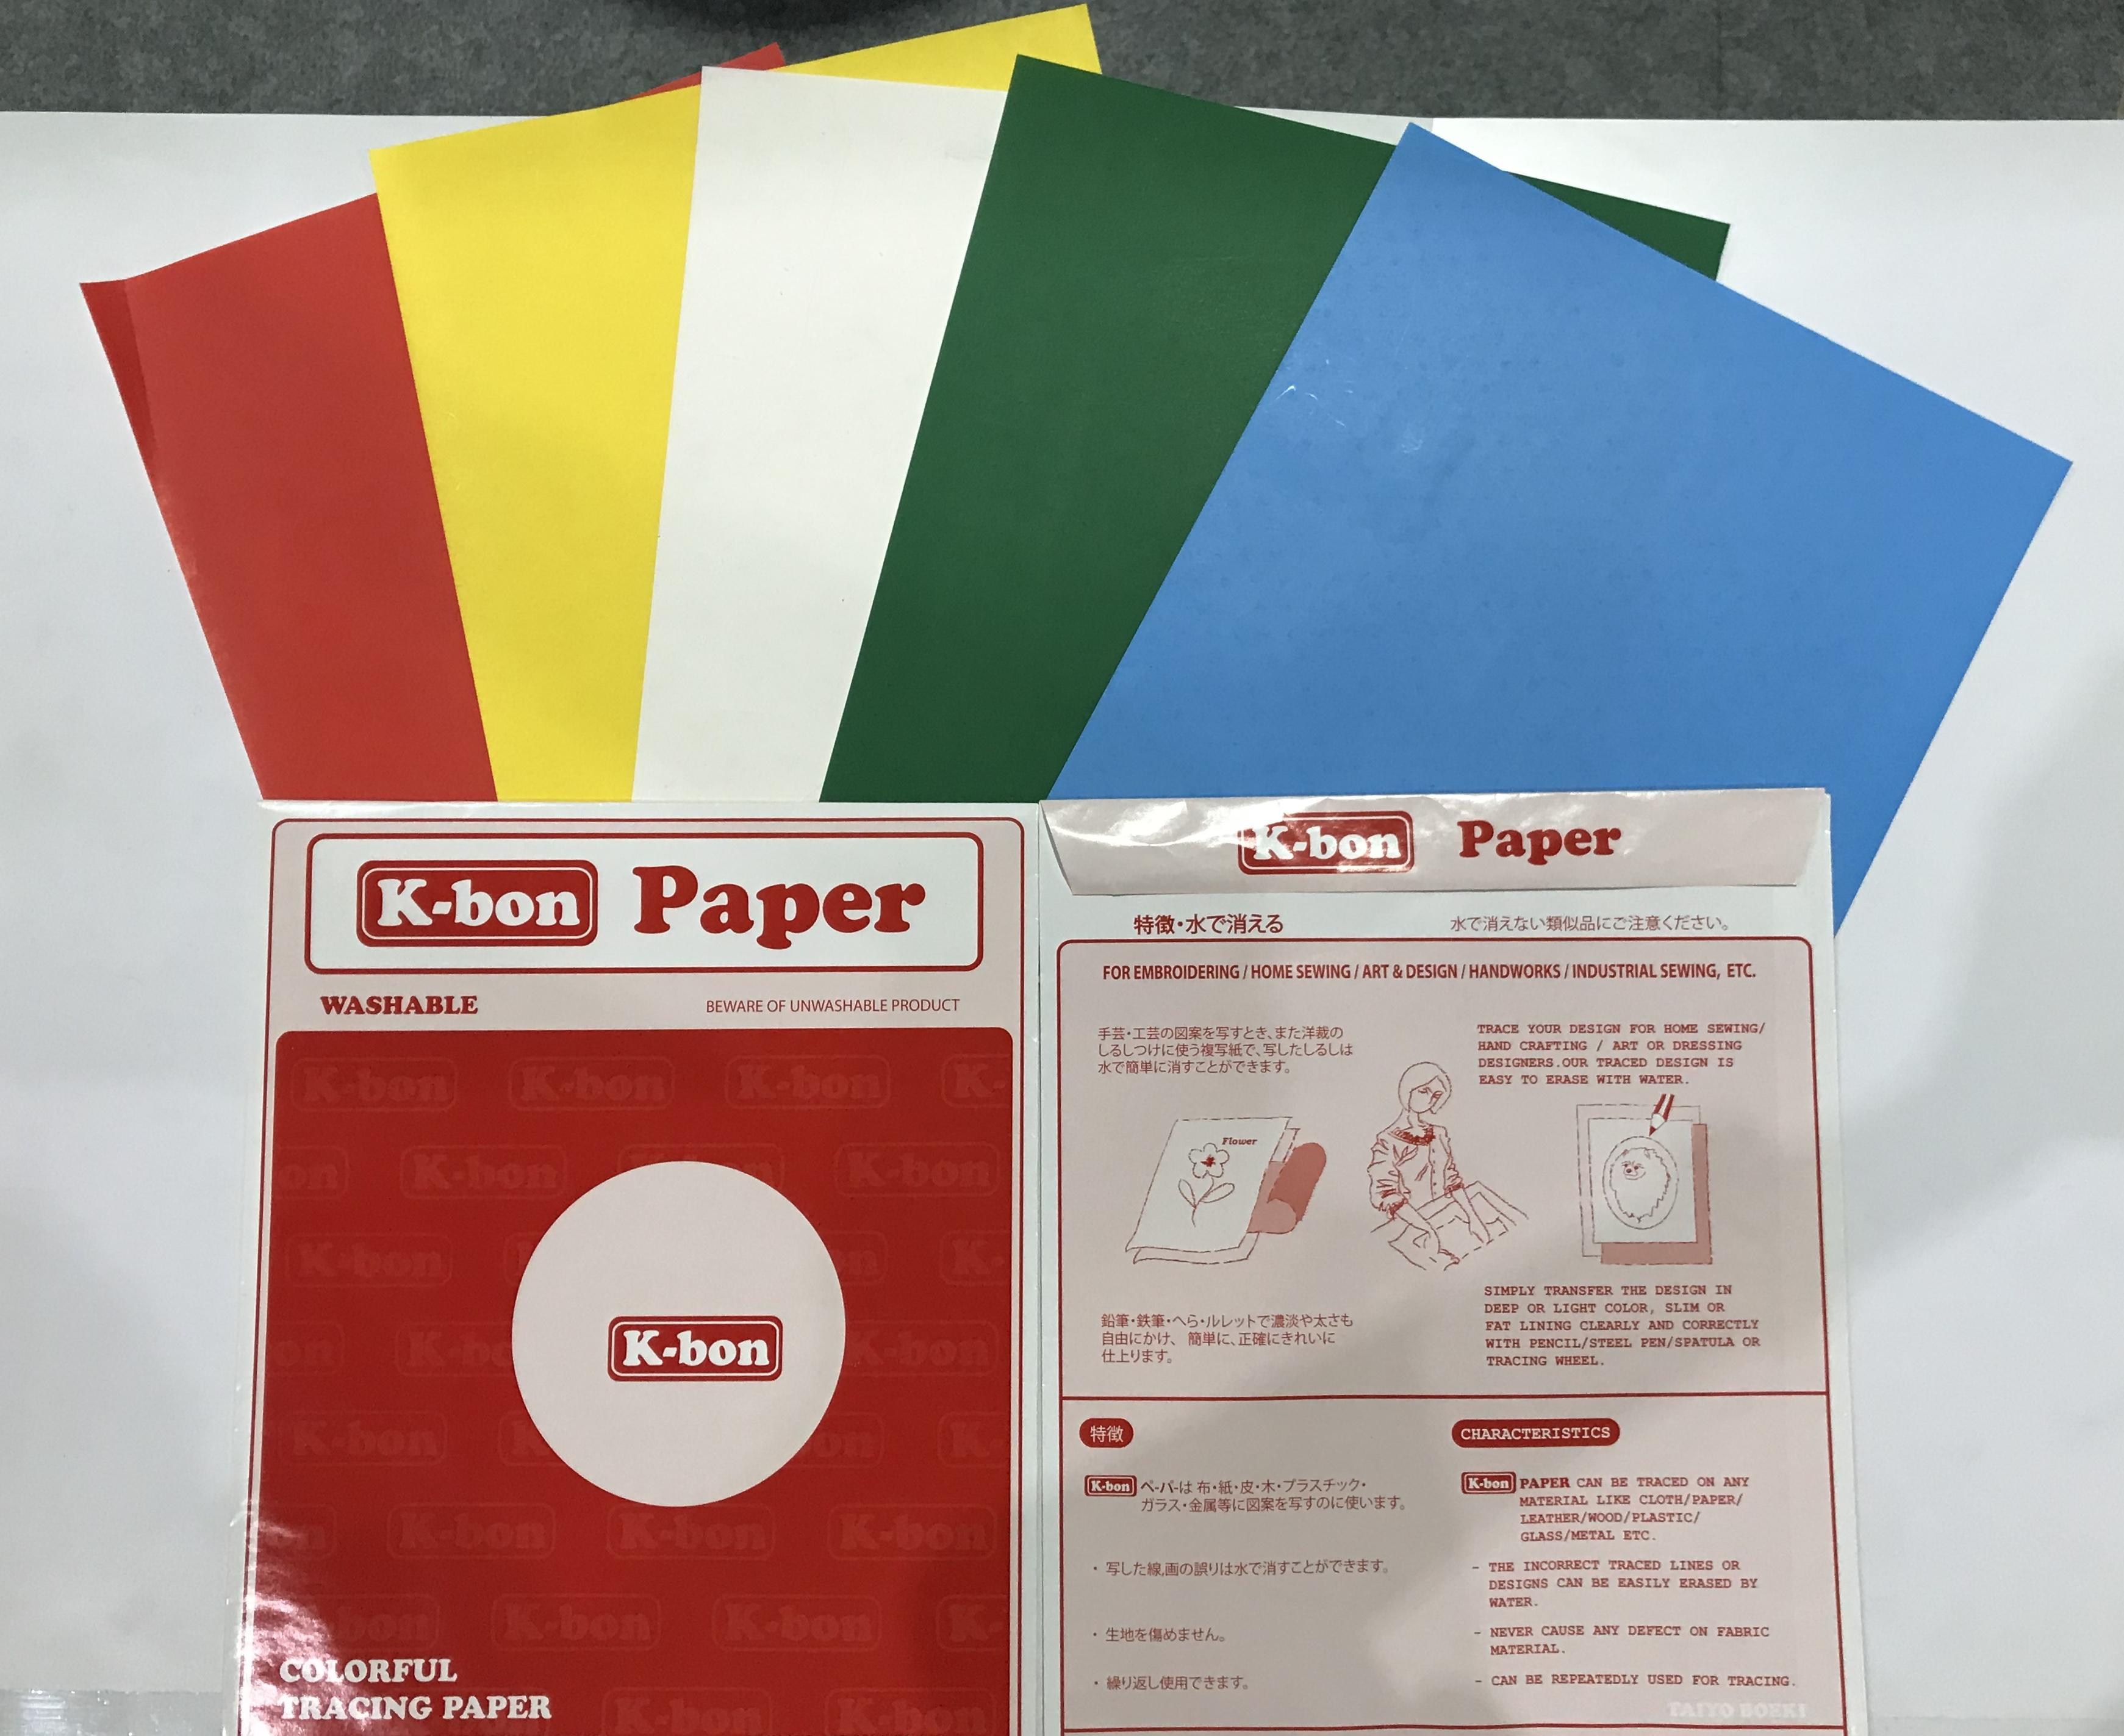 Kbonpaper / tracing paper / carbon paper / กระดาษคาร์บอน / กระดาษลอกลาย / กระดาษลอกลายผ้า